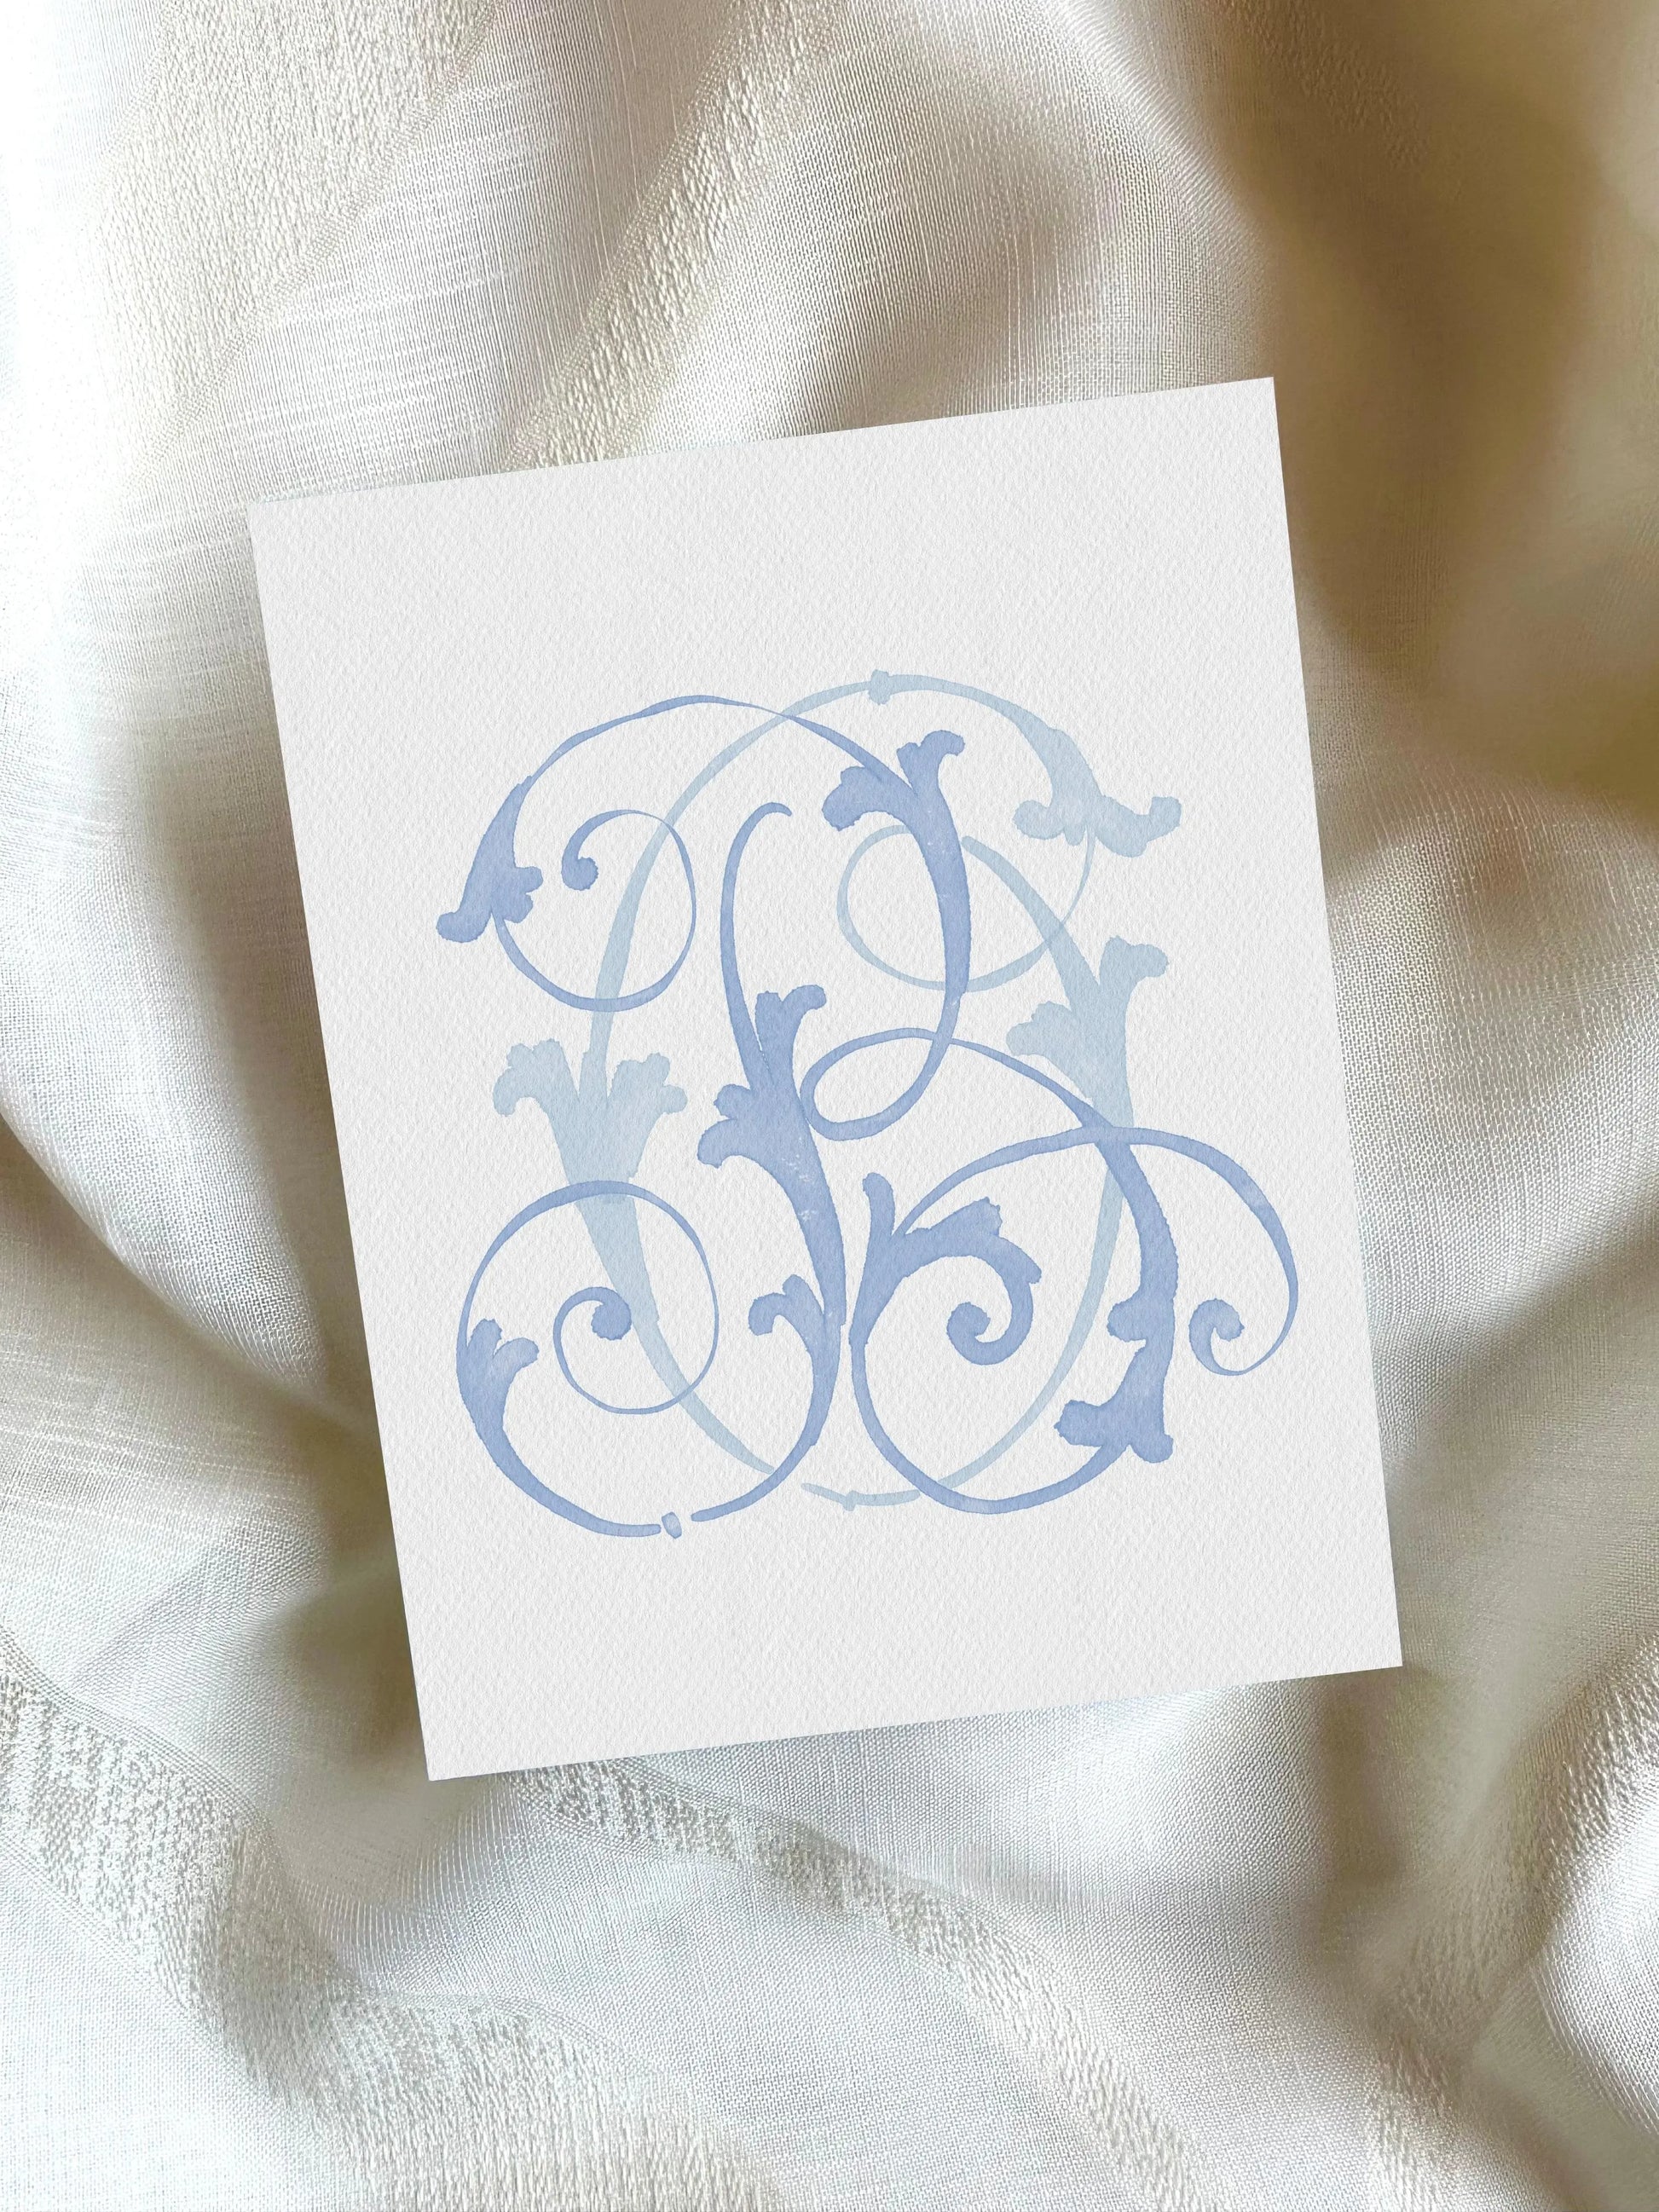 2 Letter Monogram with Letters BO | Digital Download - Wedding Monogram SVG, Personal Logo, Wedding Logo for Wedding Invitations The Wedding Crest Lab